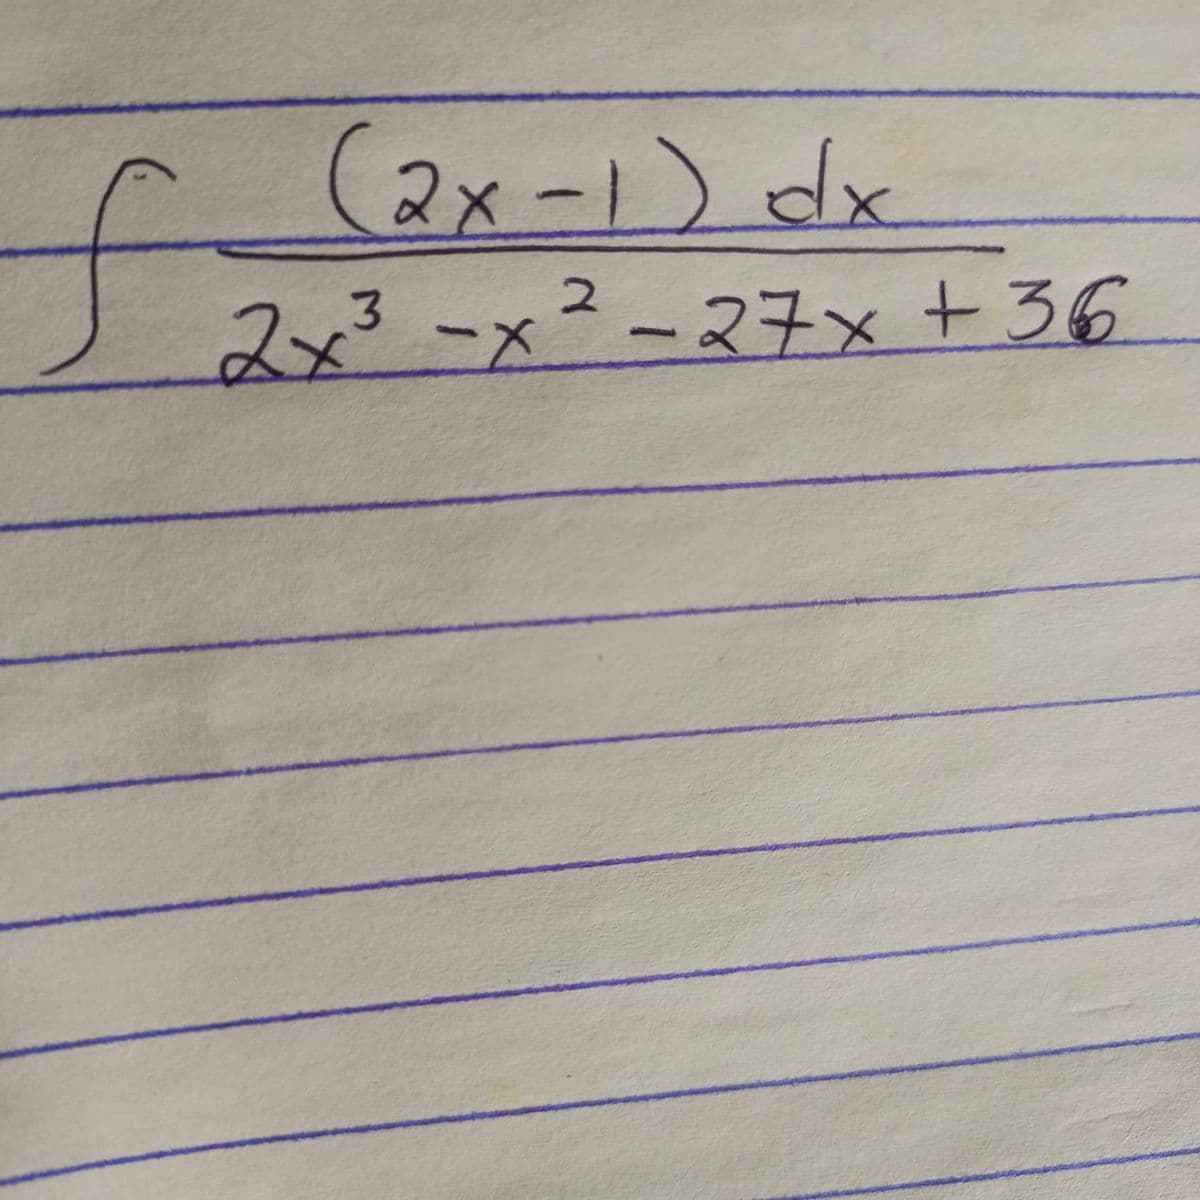 (2x-1) dx
3
2x²-x²-27x +36
f